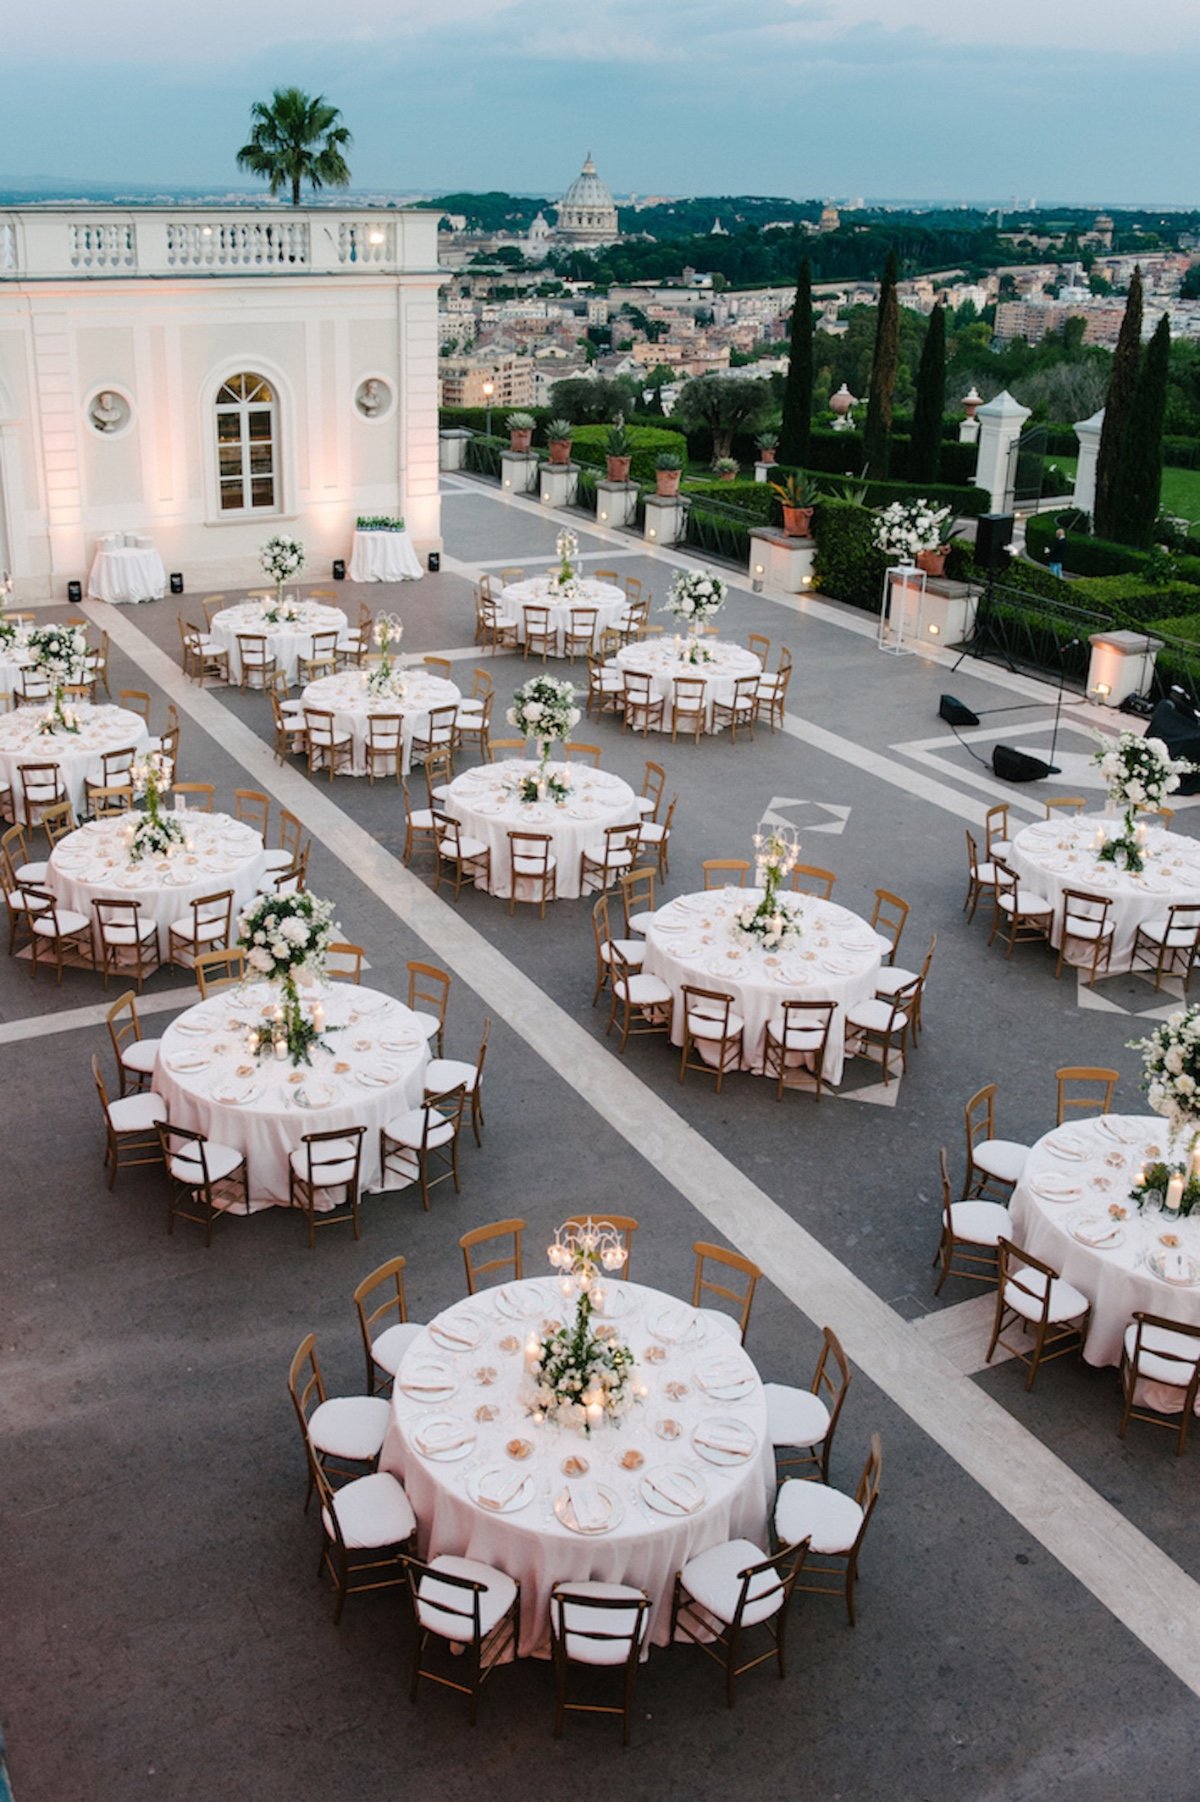 Villa Miani wedding reception designed by  Dolce Vita Weddings